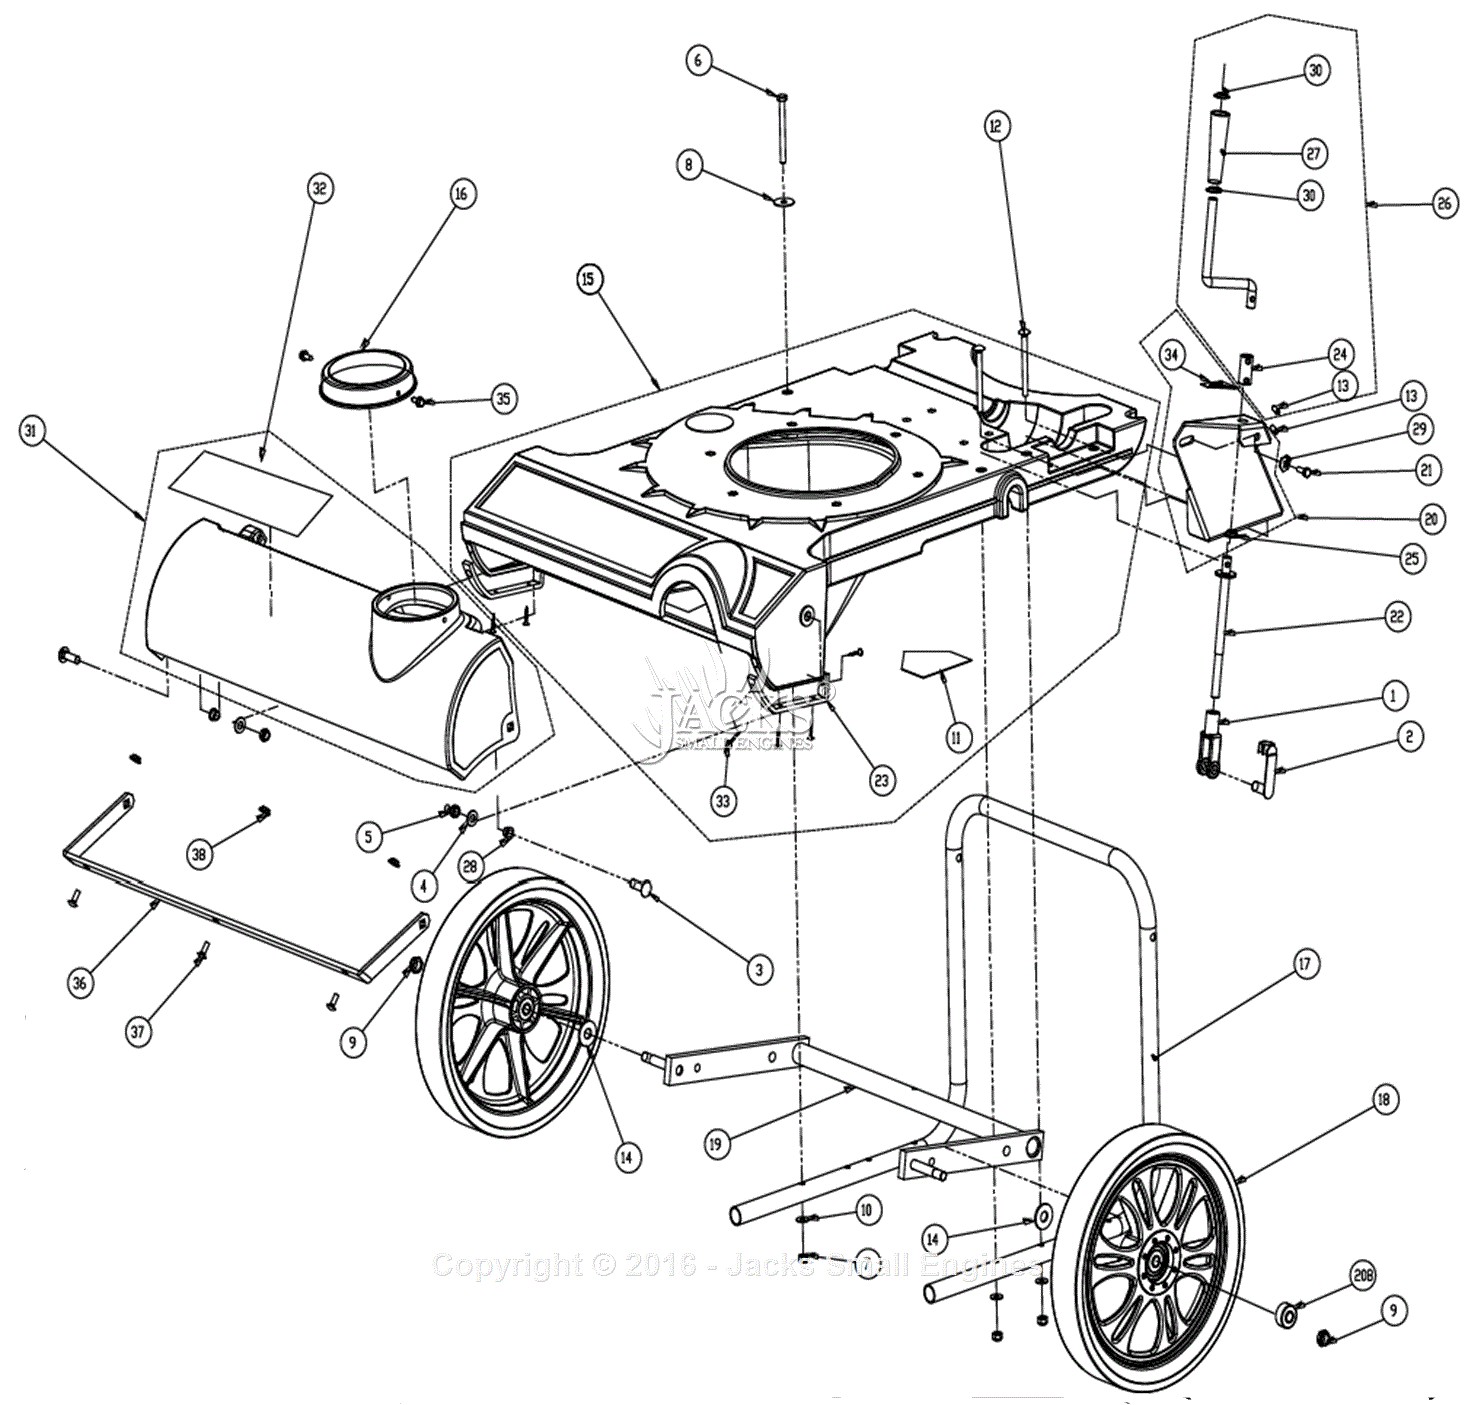 Honda Small Engine Parts Diagram Billy Goat Mv650h Parts Diagrams Of Honda Small Engine Parts Diagram